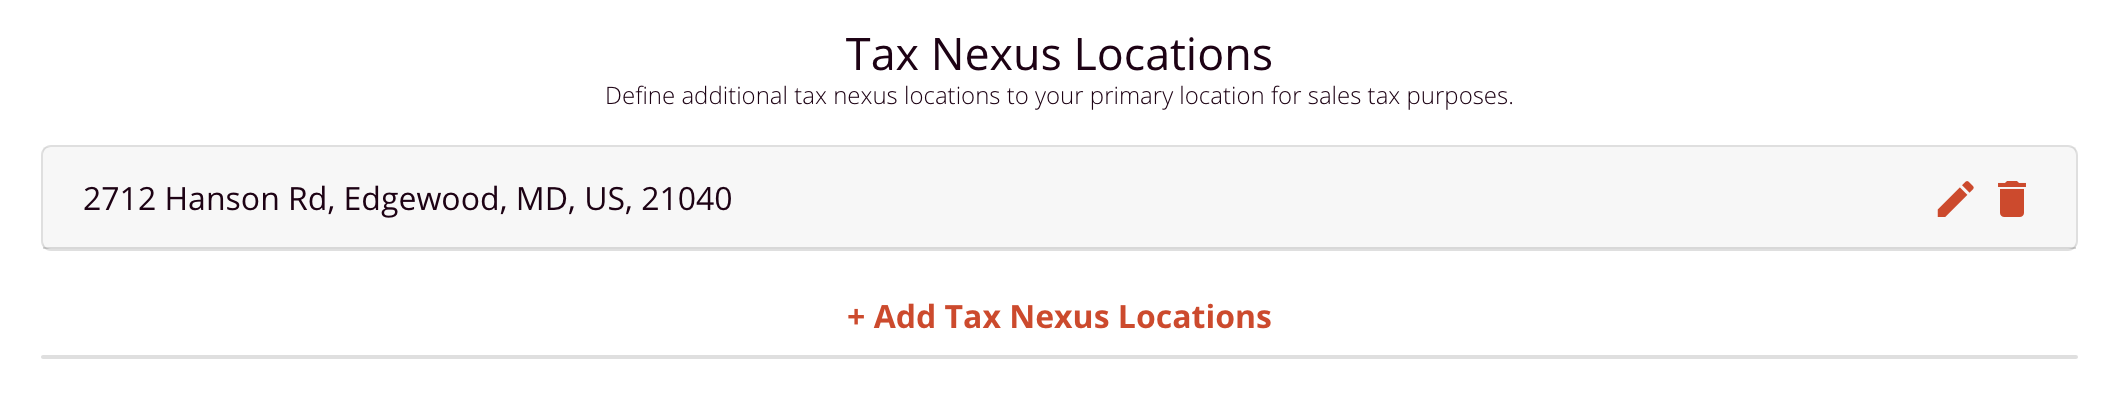 Tax Nexus List Screenshot